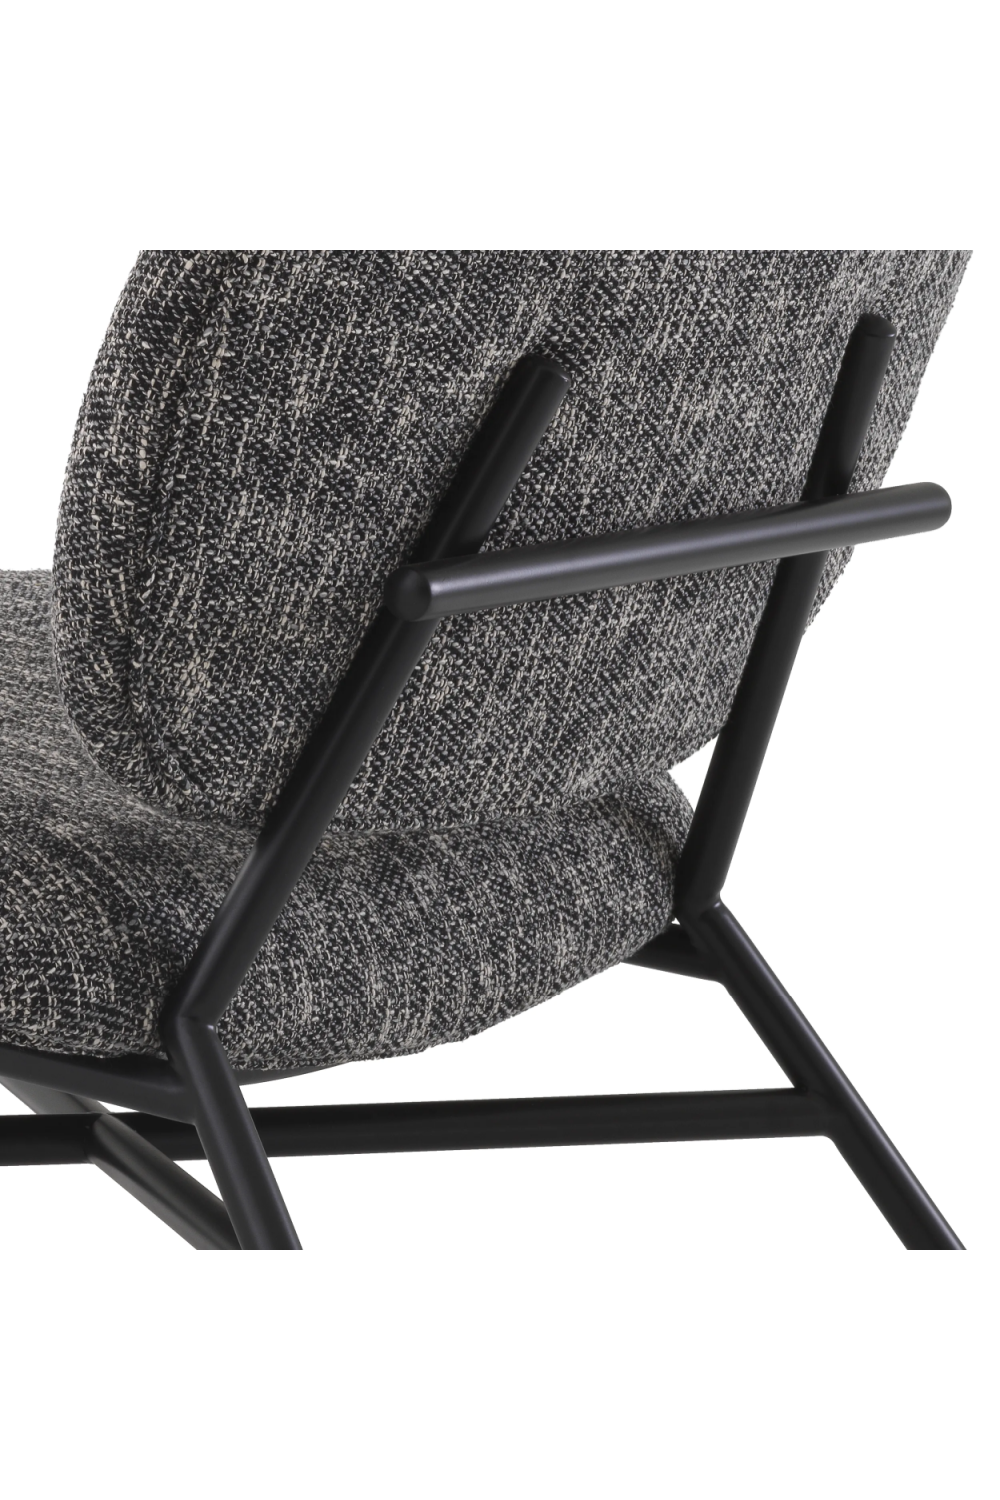 Black Retro Lounge Chair | Eichholtz Madsen | Oroa.com